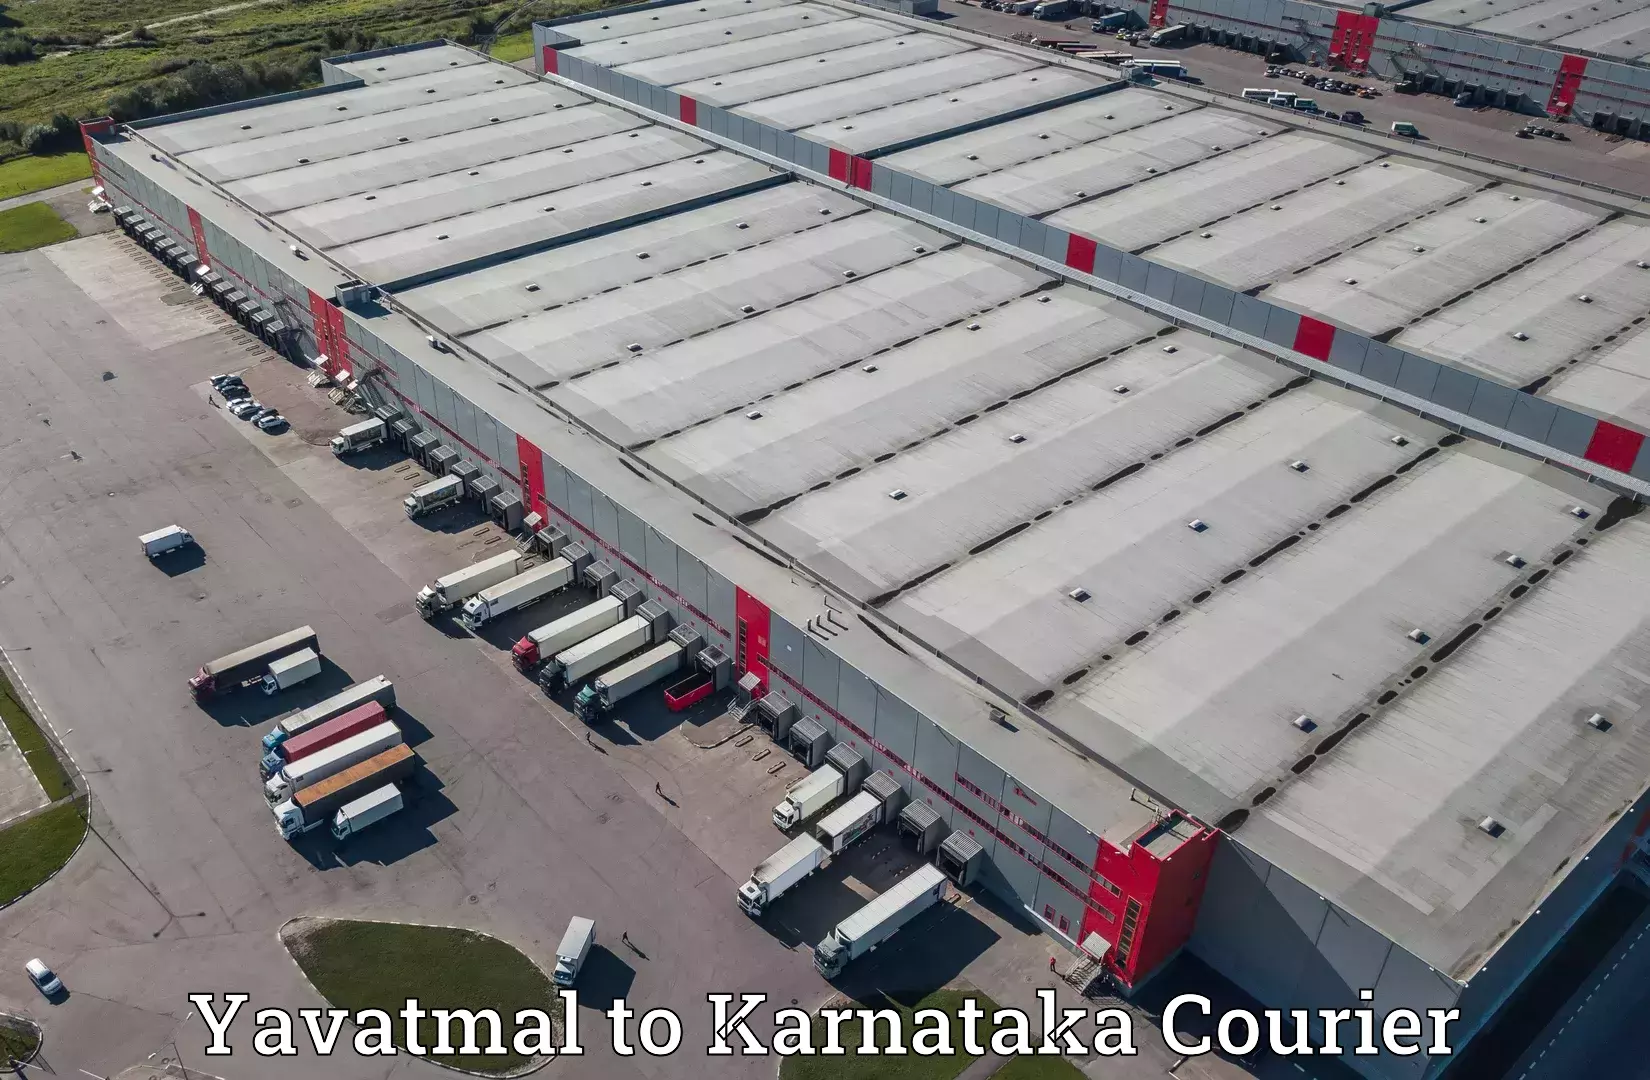 Courier service partnerships Yavatmal to Karnataka